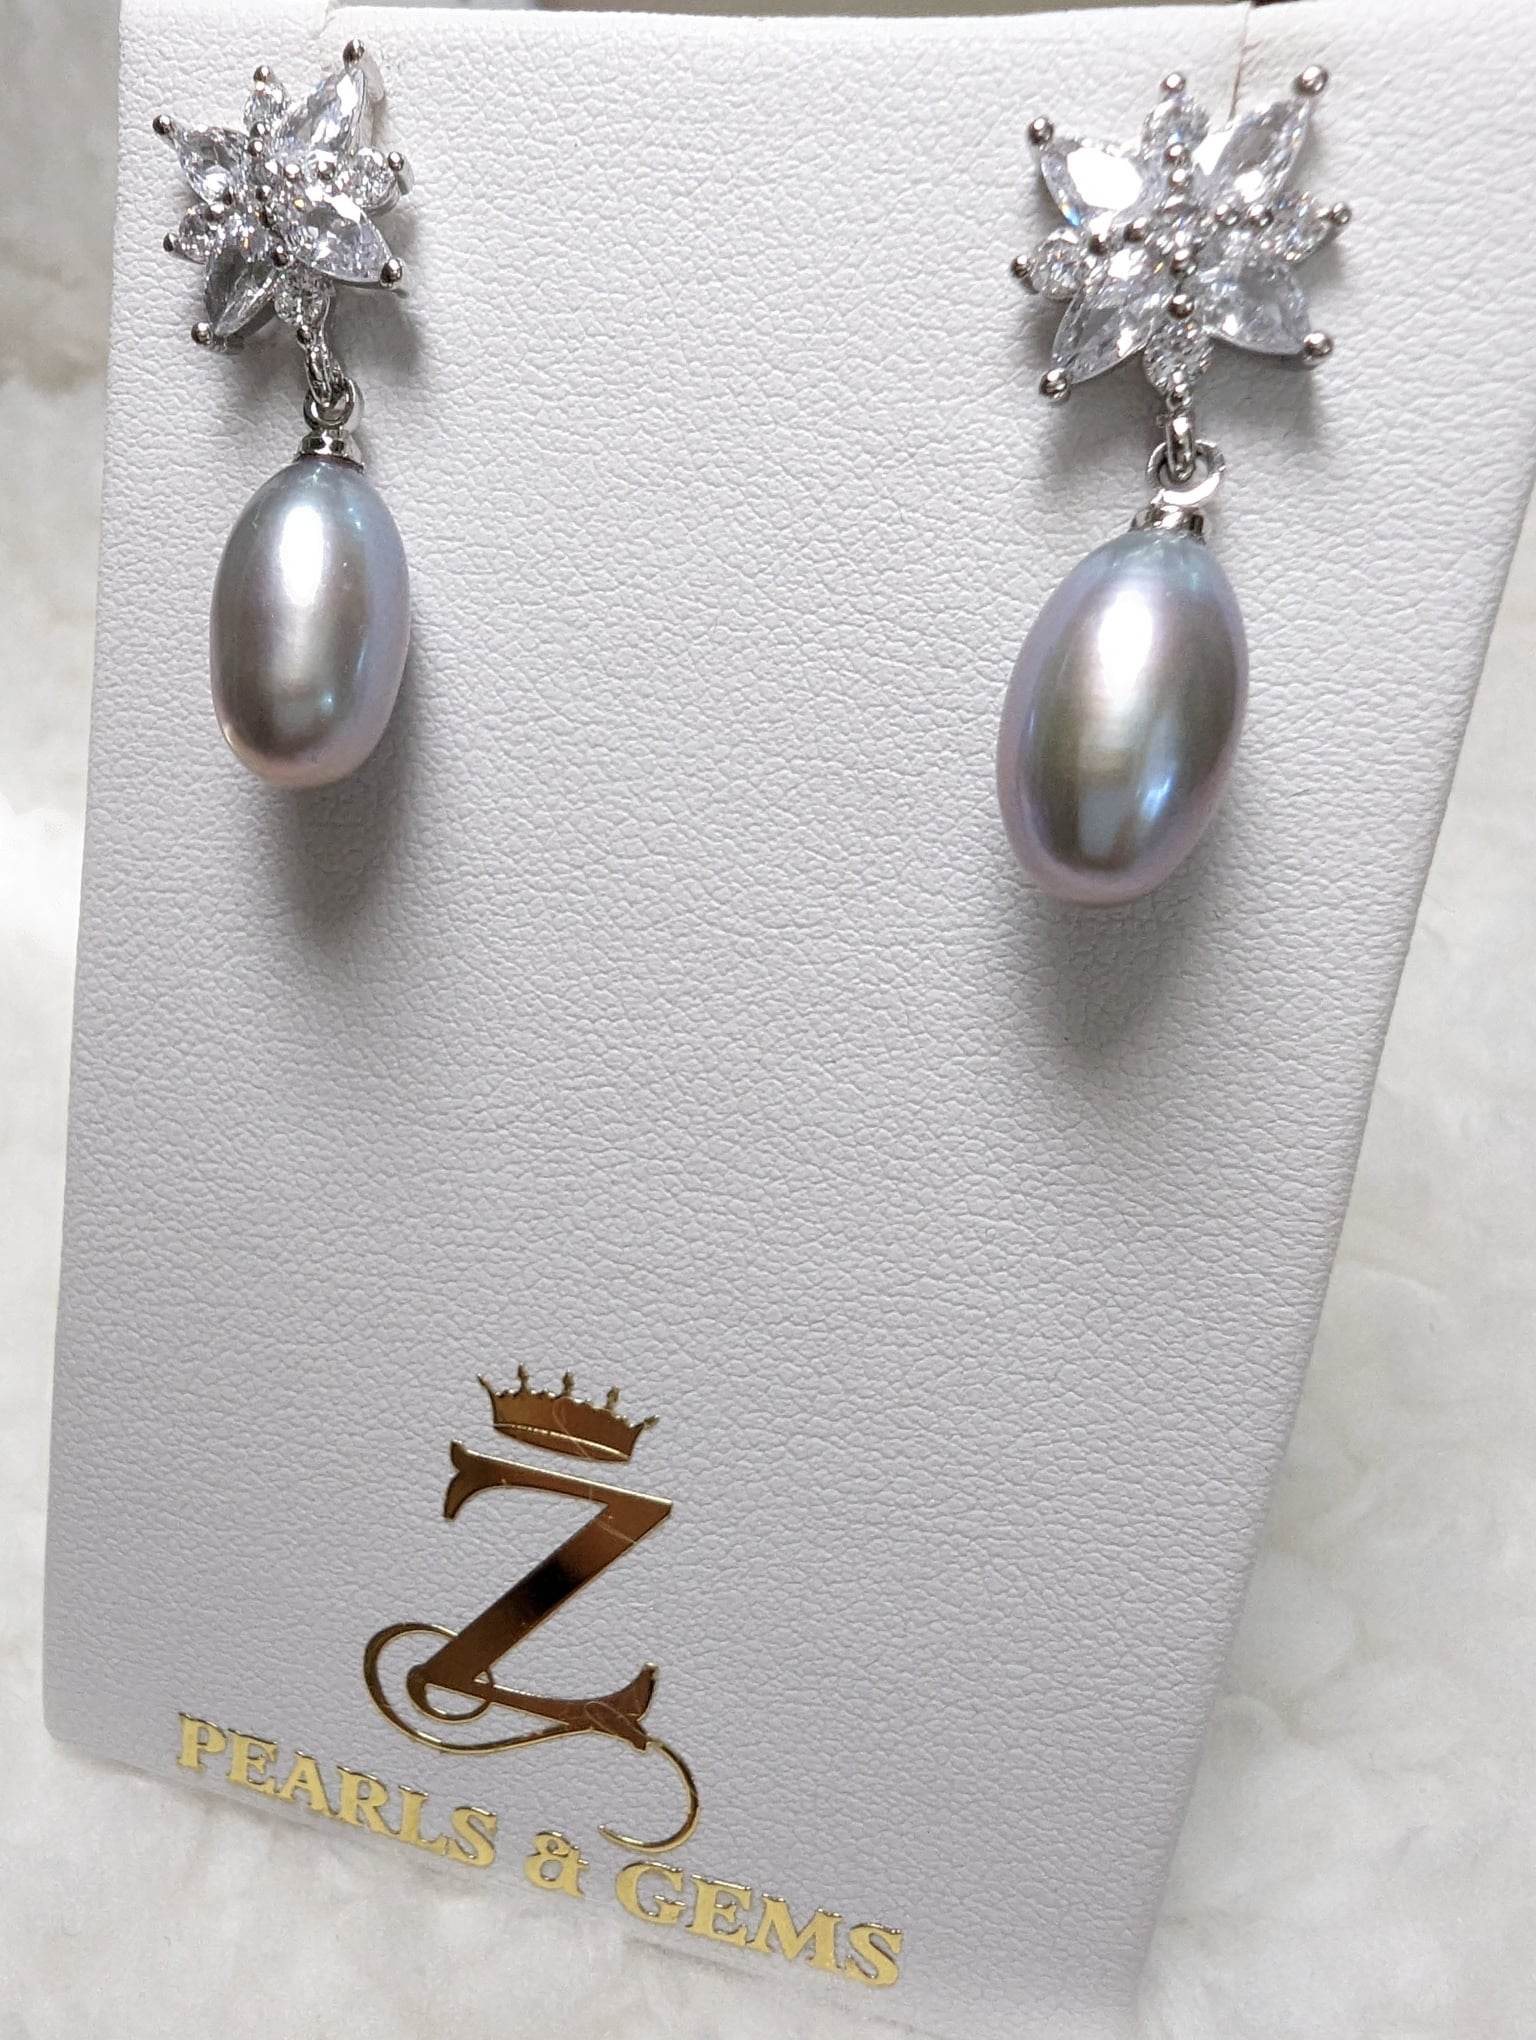 Exquisite Freshwater Pearl Earrings | Z Pearls & Gems